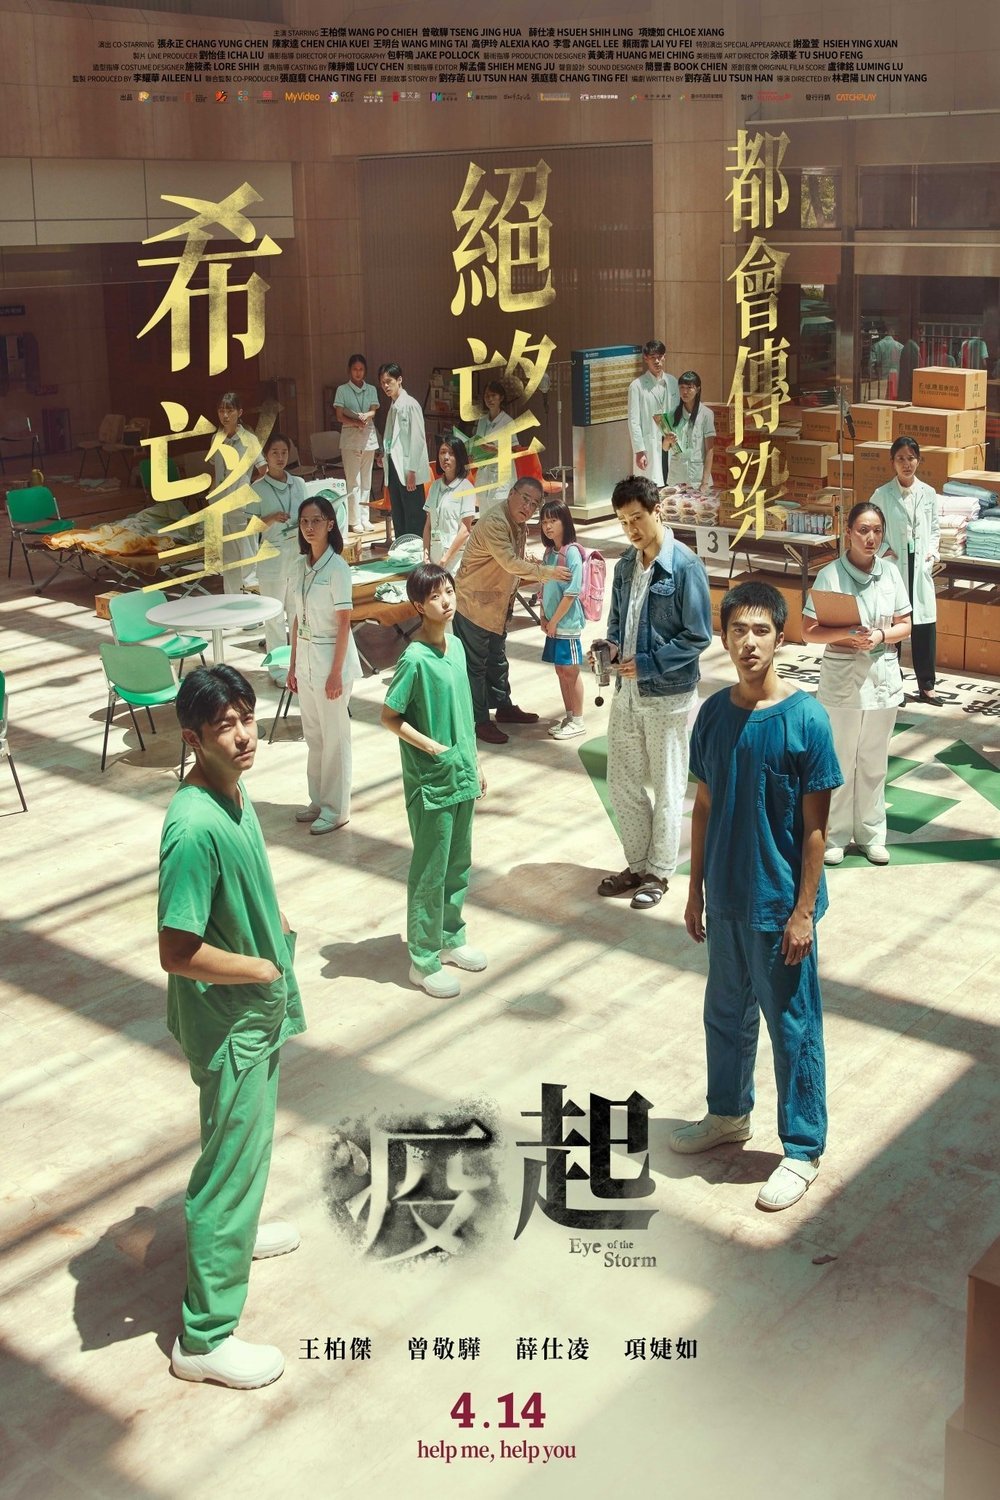 Mandarin poster of the movie Yi qi